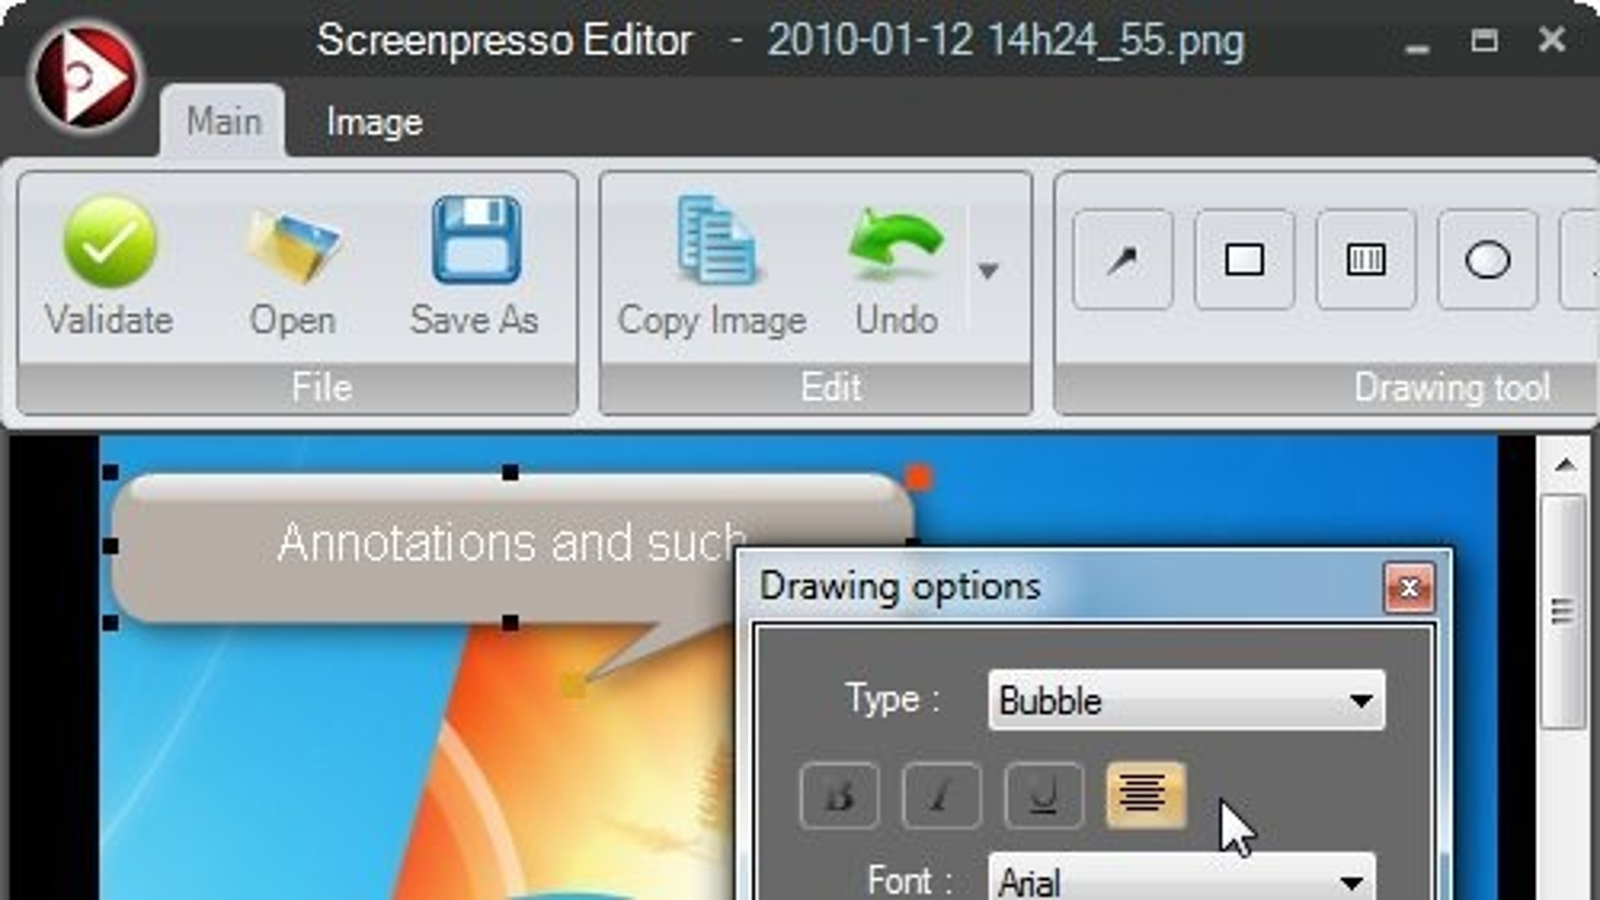 Screenpresso Pro 2.1.13 for iphone download